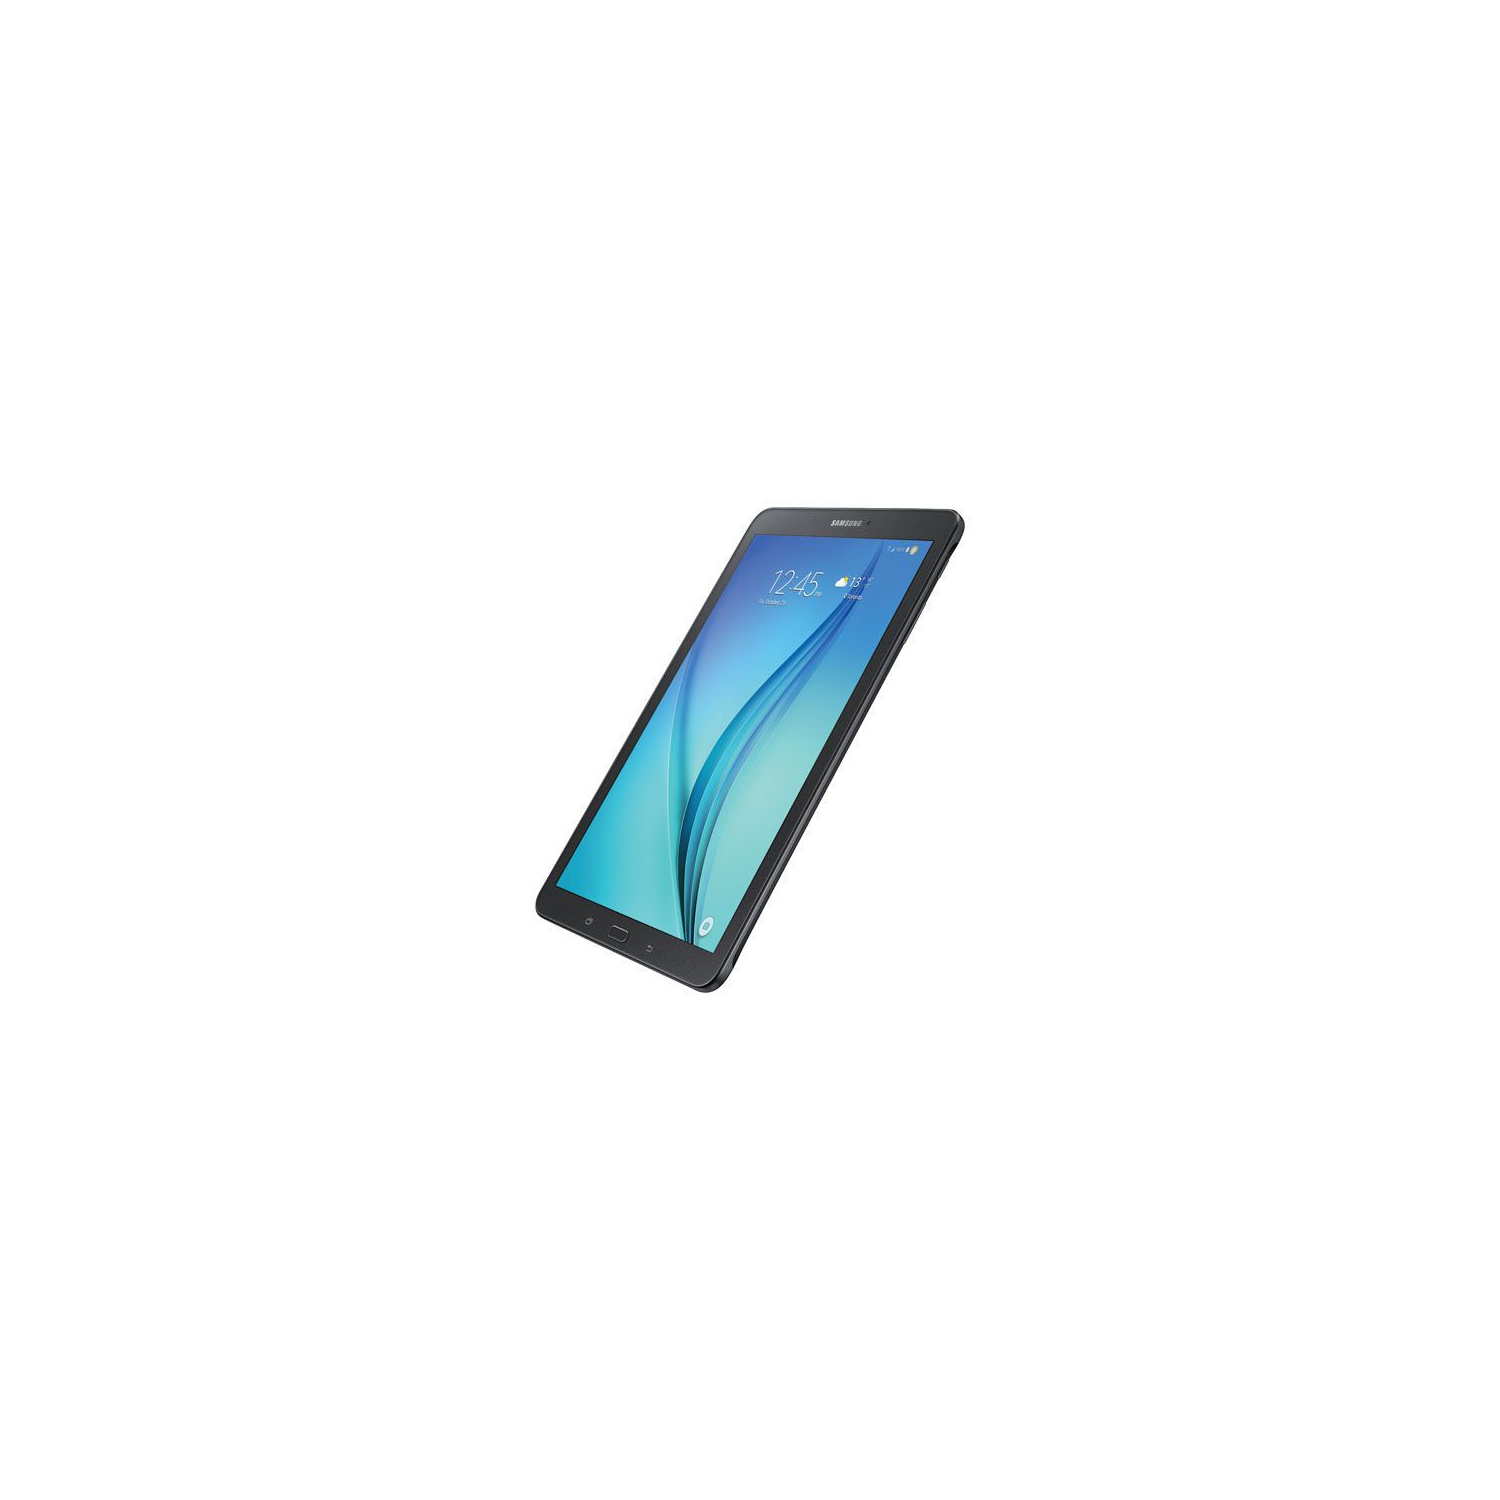 Refurbished (Good) - Samsung Galaxy Tab E 9.6" 16GB Android 5.0 Lollipop Tablet - Black